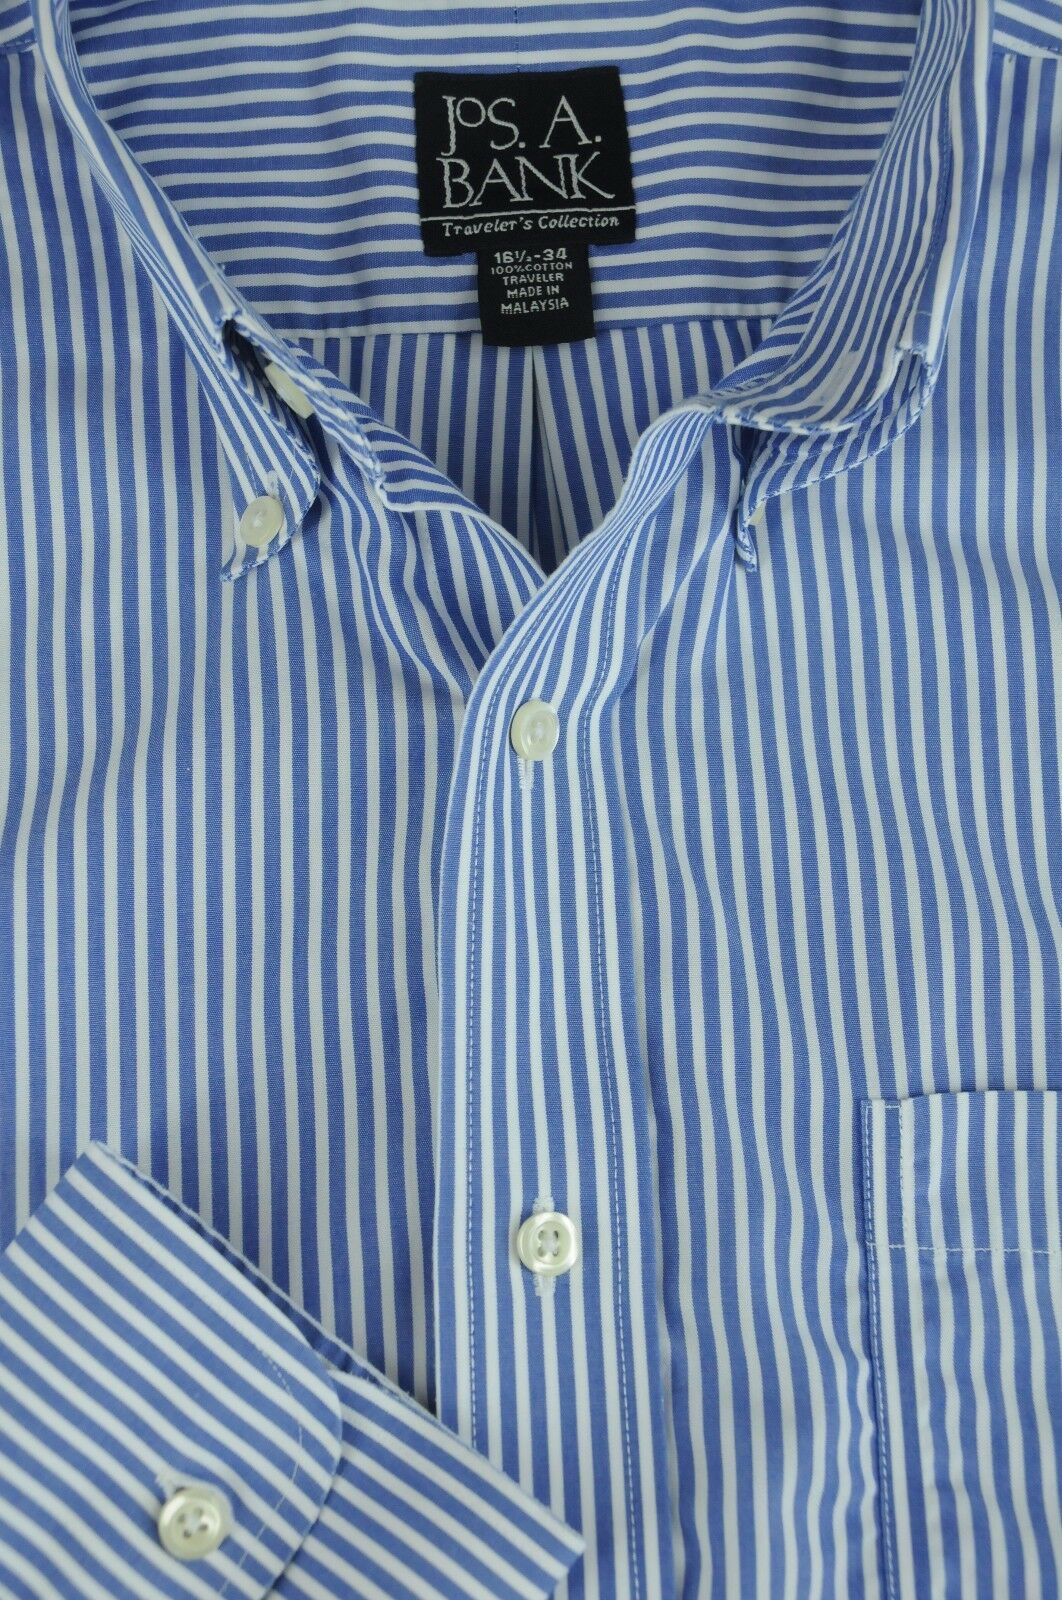 Jos A Bank Men's Blue & Striped Cotton Dress Shirt 16.5 x 34 - Dress Shirts